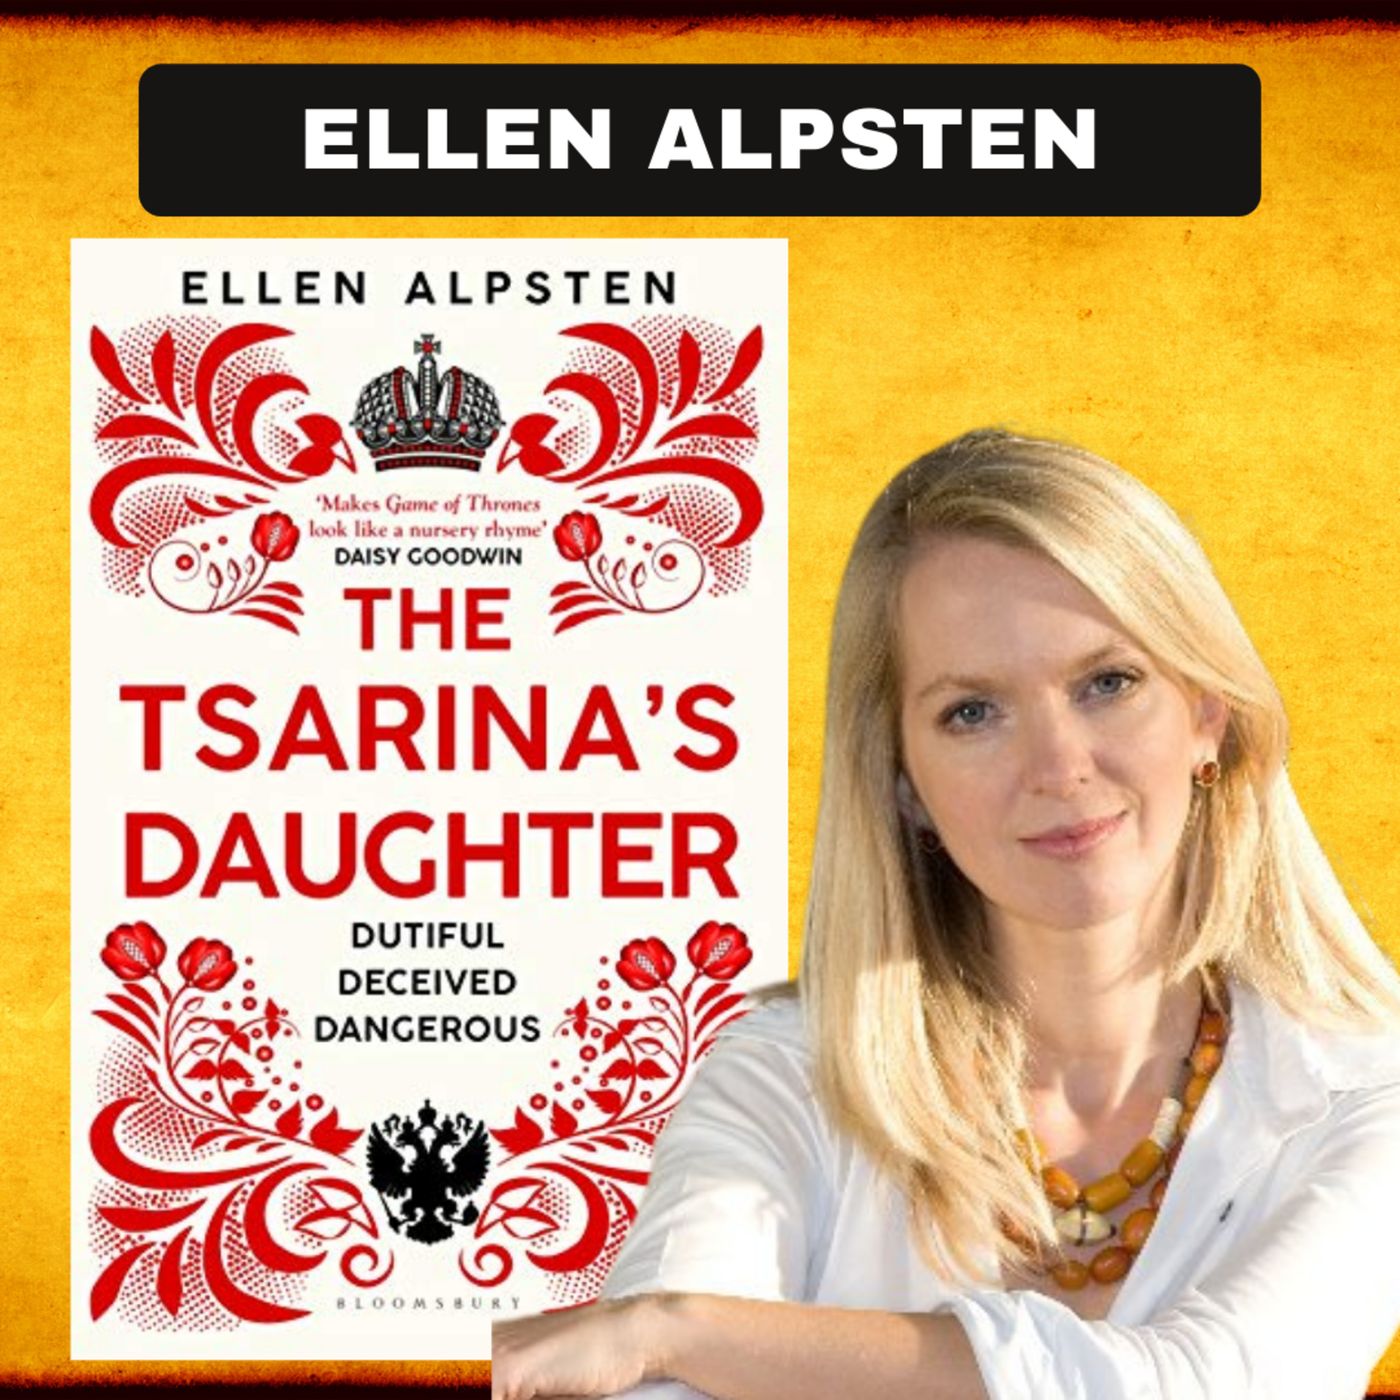 ELLEN ALPSTEN: The Tsarina's Daughter on The WCCS!